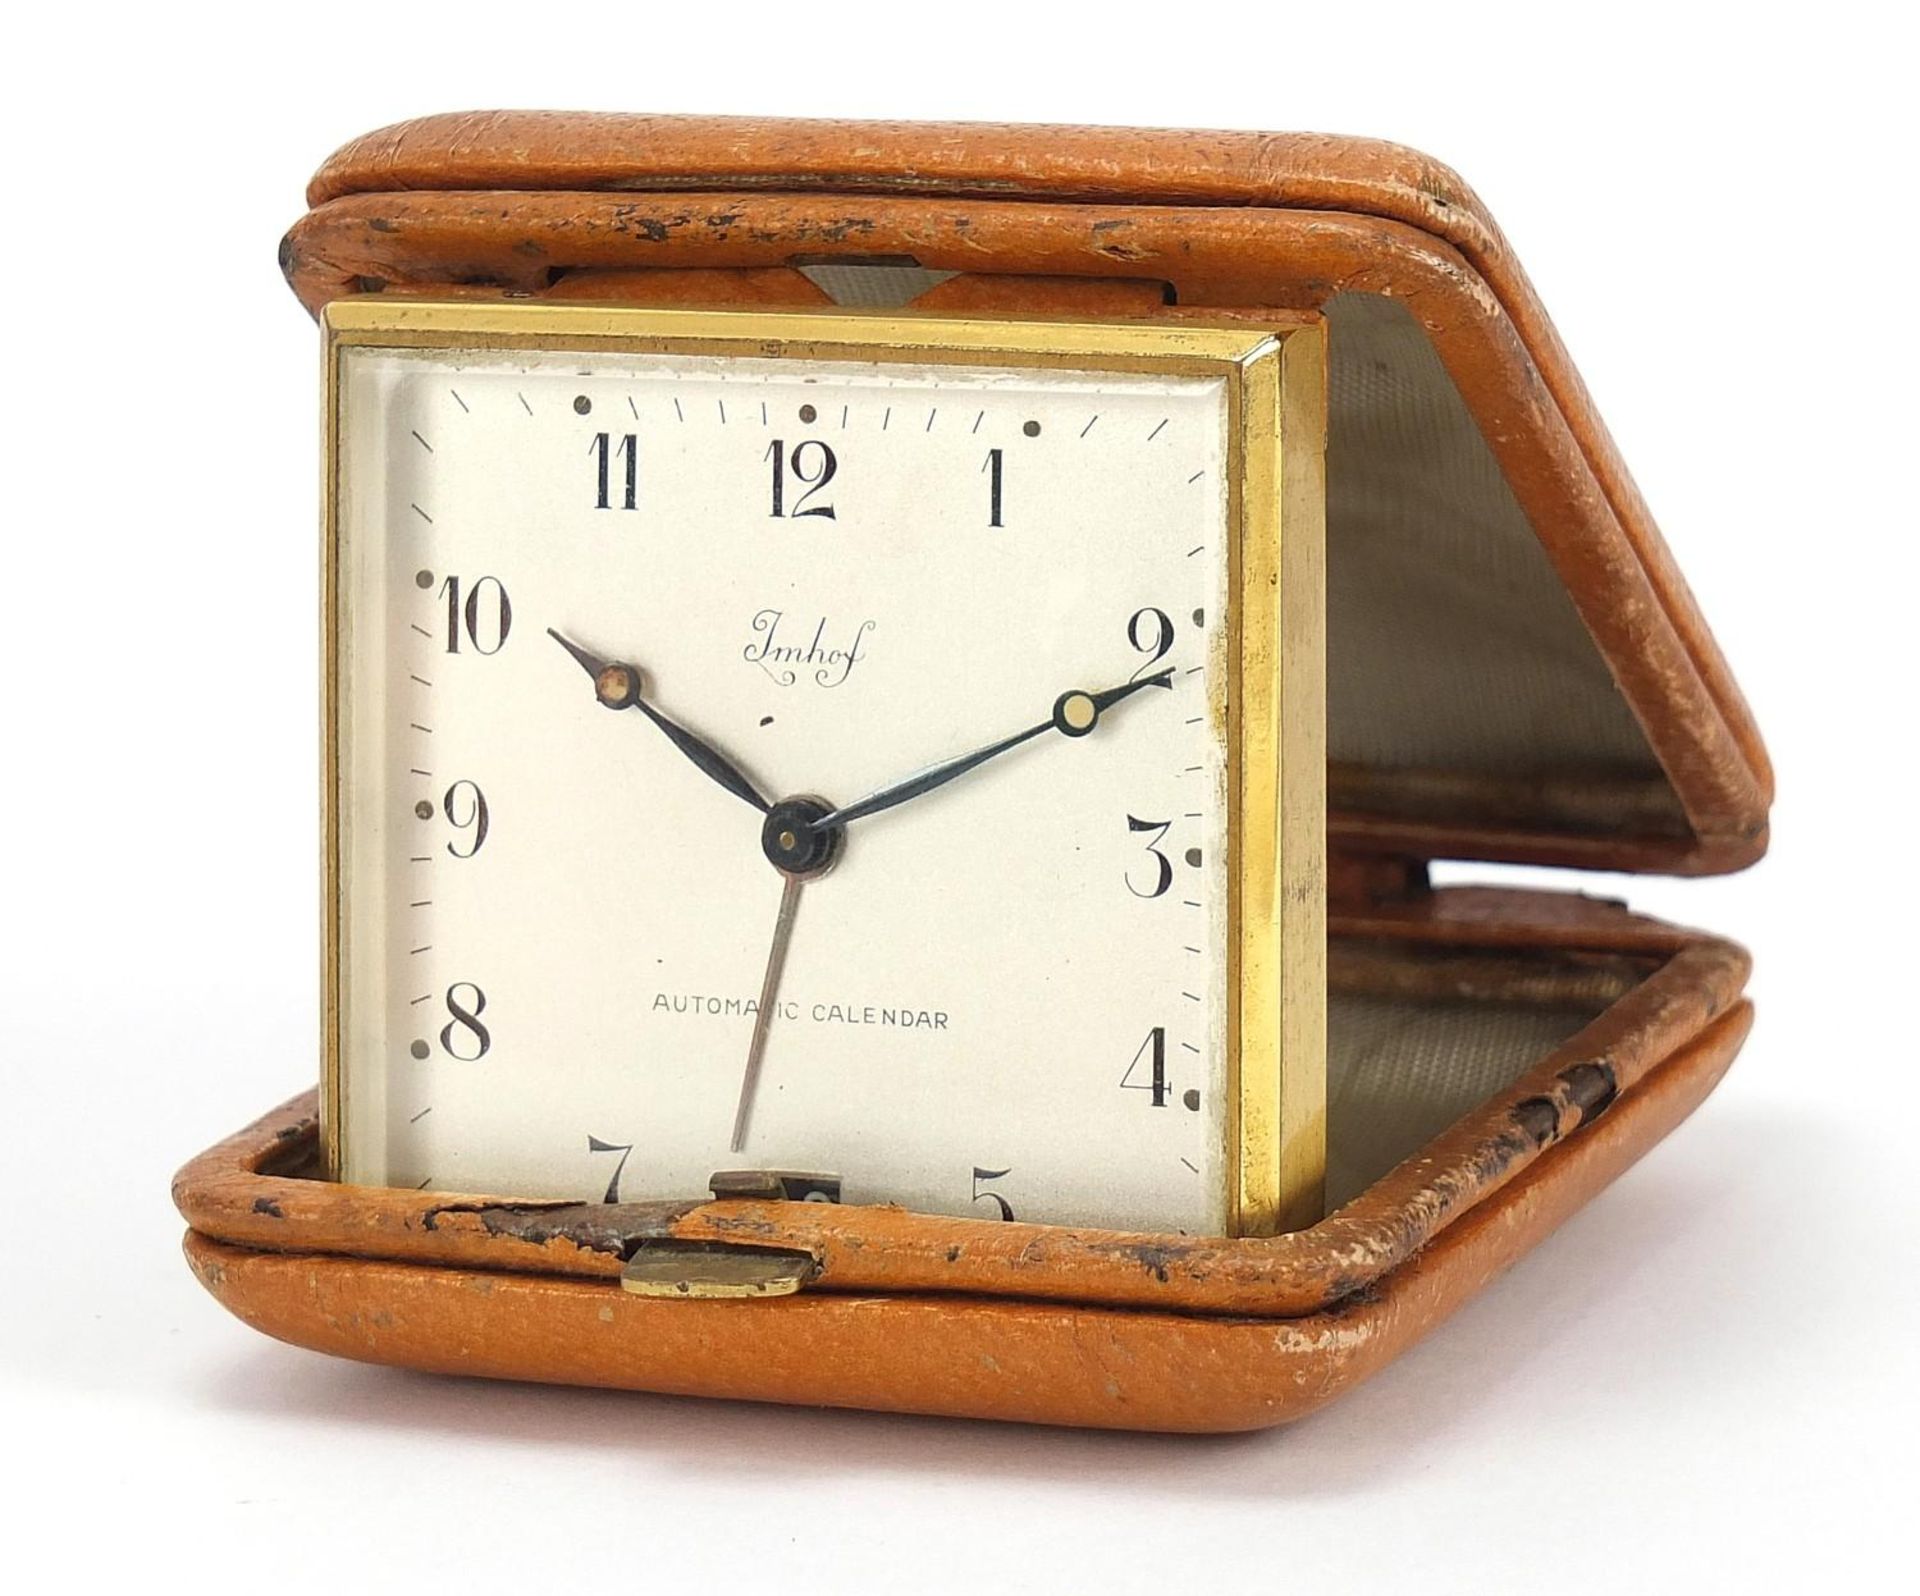 Vintage Imhof automatic calendar eight day travel alarm clock, 8.5cm wide :